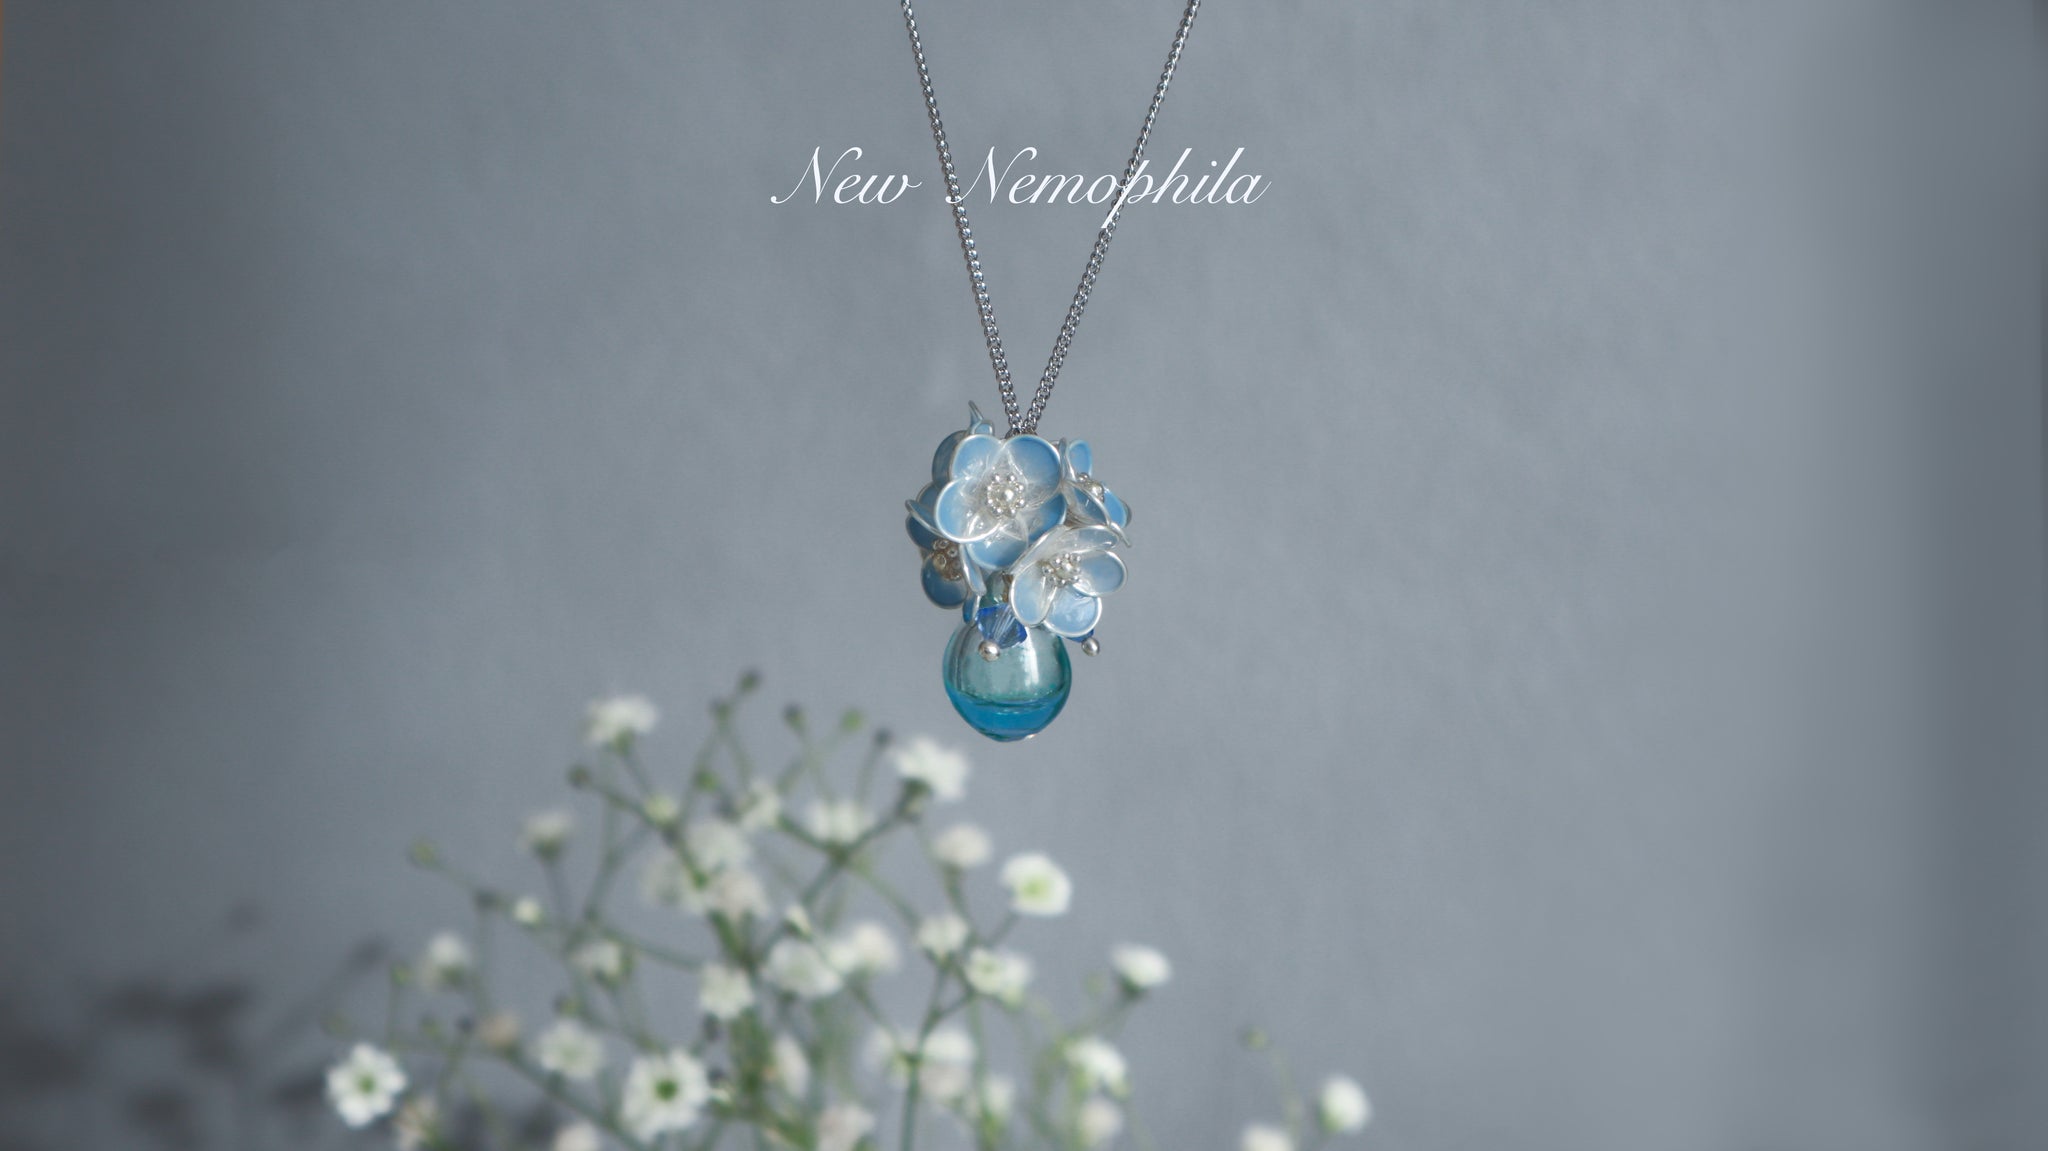 Nemophila scented vase aroma necklace